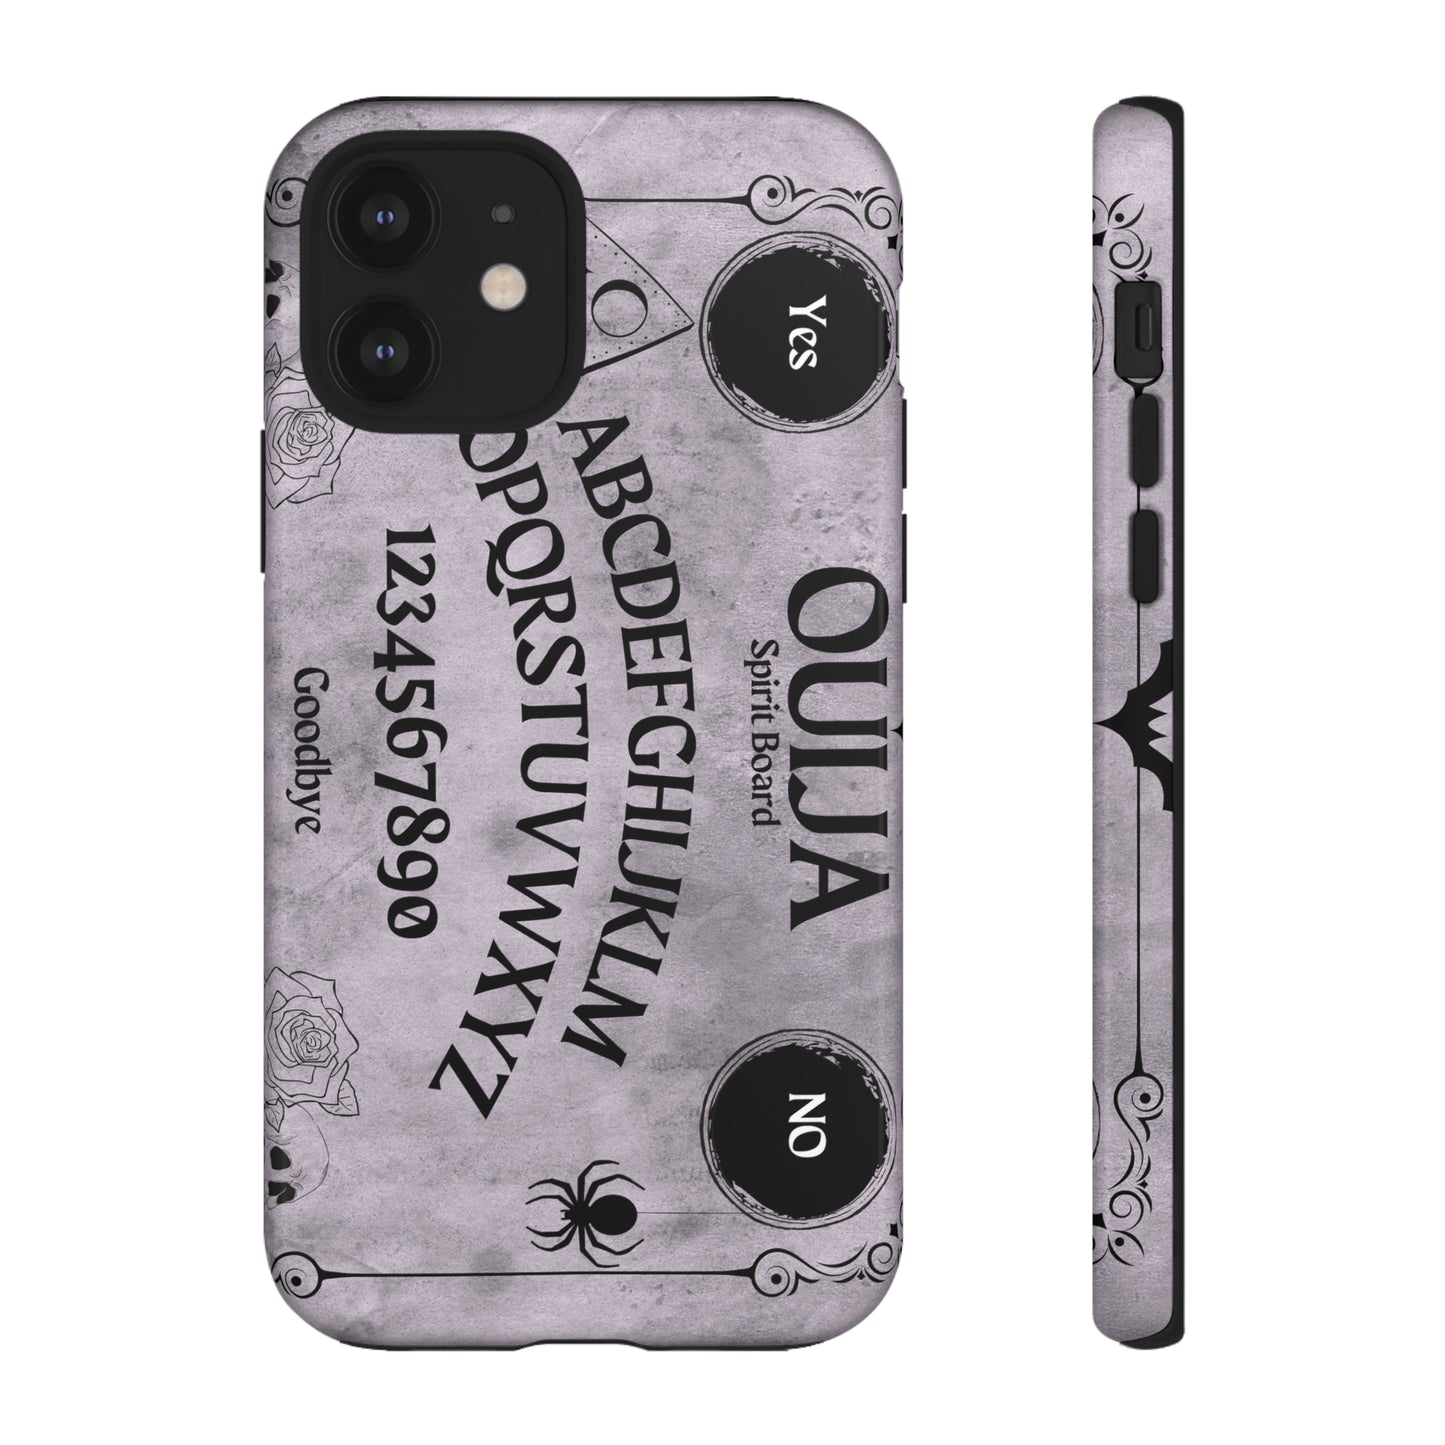 Ouija Board Tough Phone Cases For Samsung iPhone GooglePhone CaseVTZdesignsiPhone 12GlossyAccessoriesGlossyhalloween